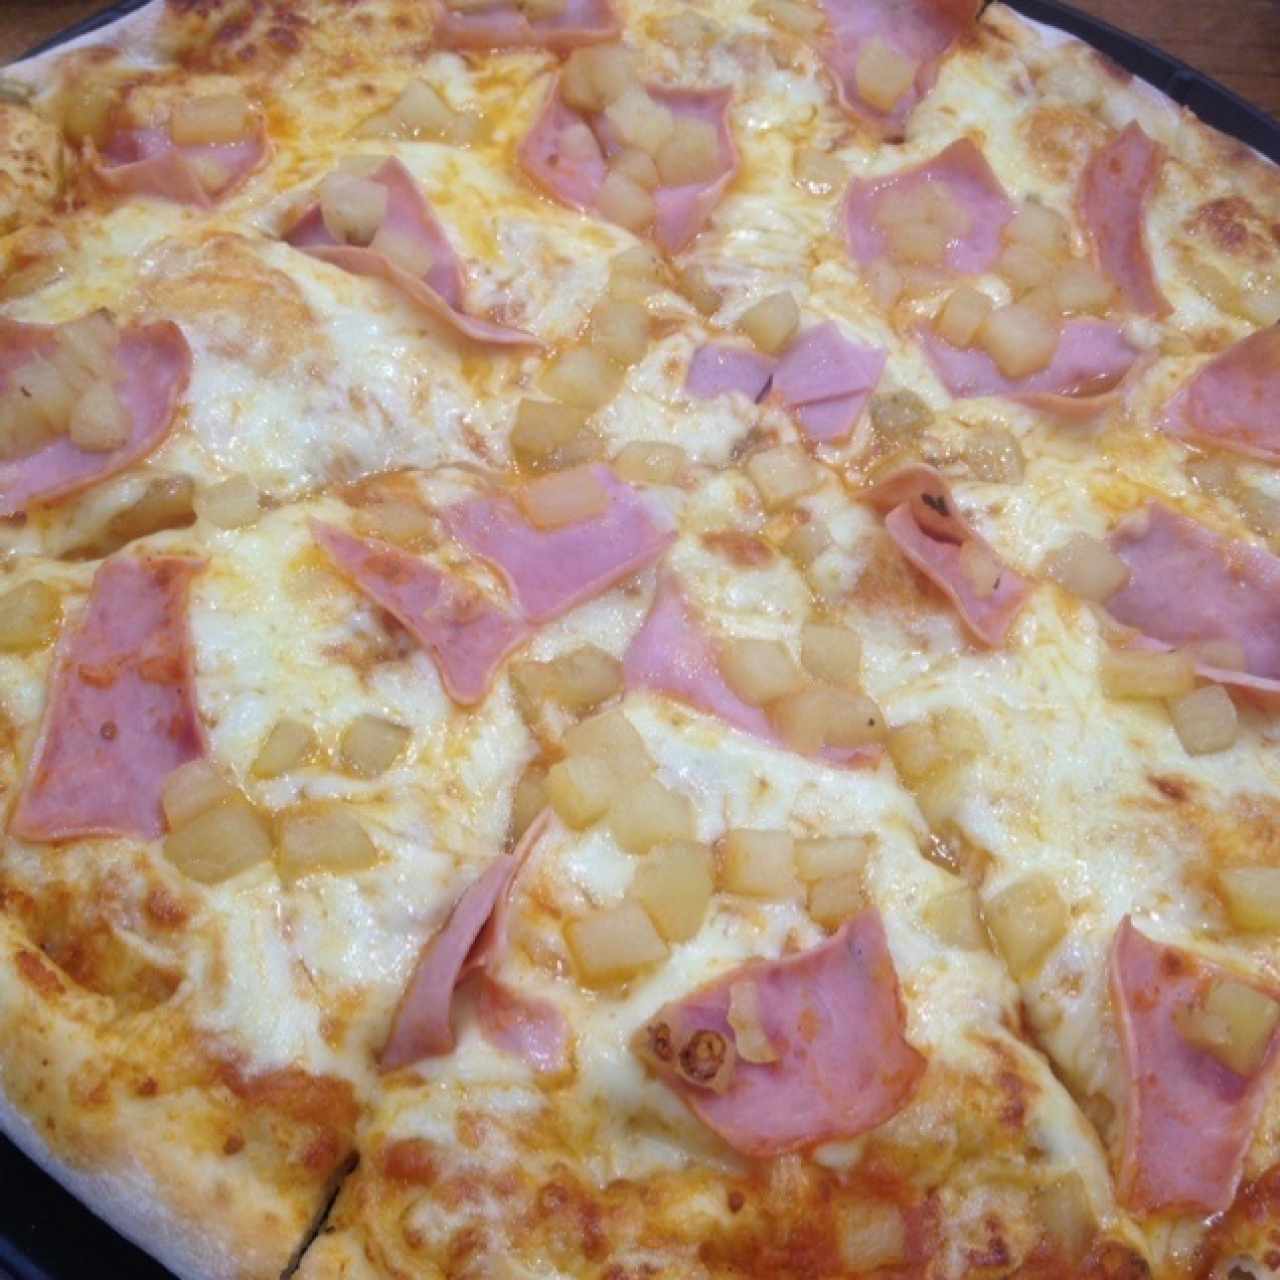 me encanta la pizza hawaiana